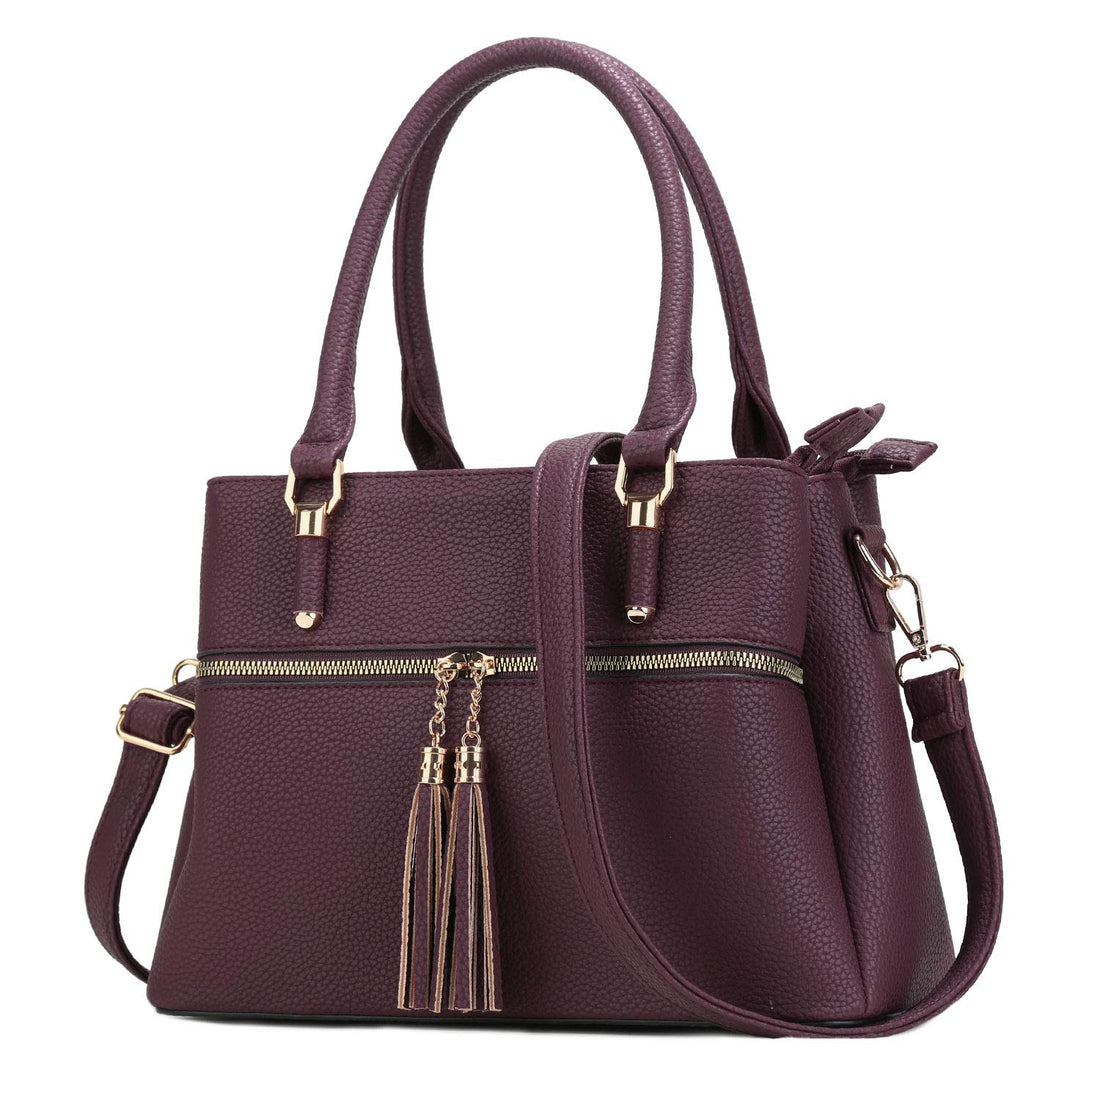 KKXIU Triple Compartment Purses and Handbags for Women Top Handle Satchel Shoulder Ladies Bags with Tassel (D-Wine)